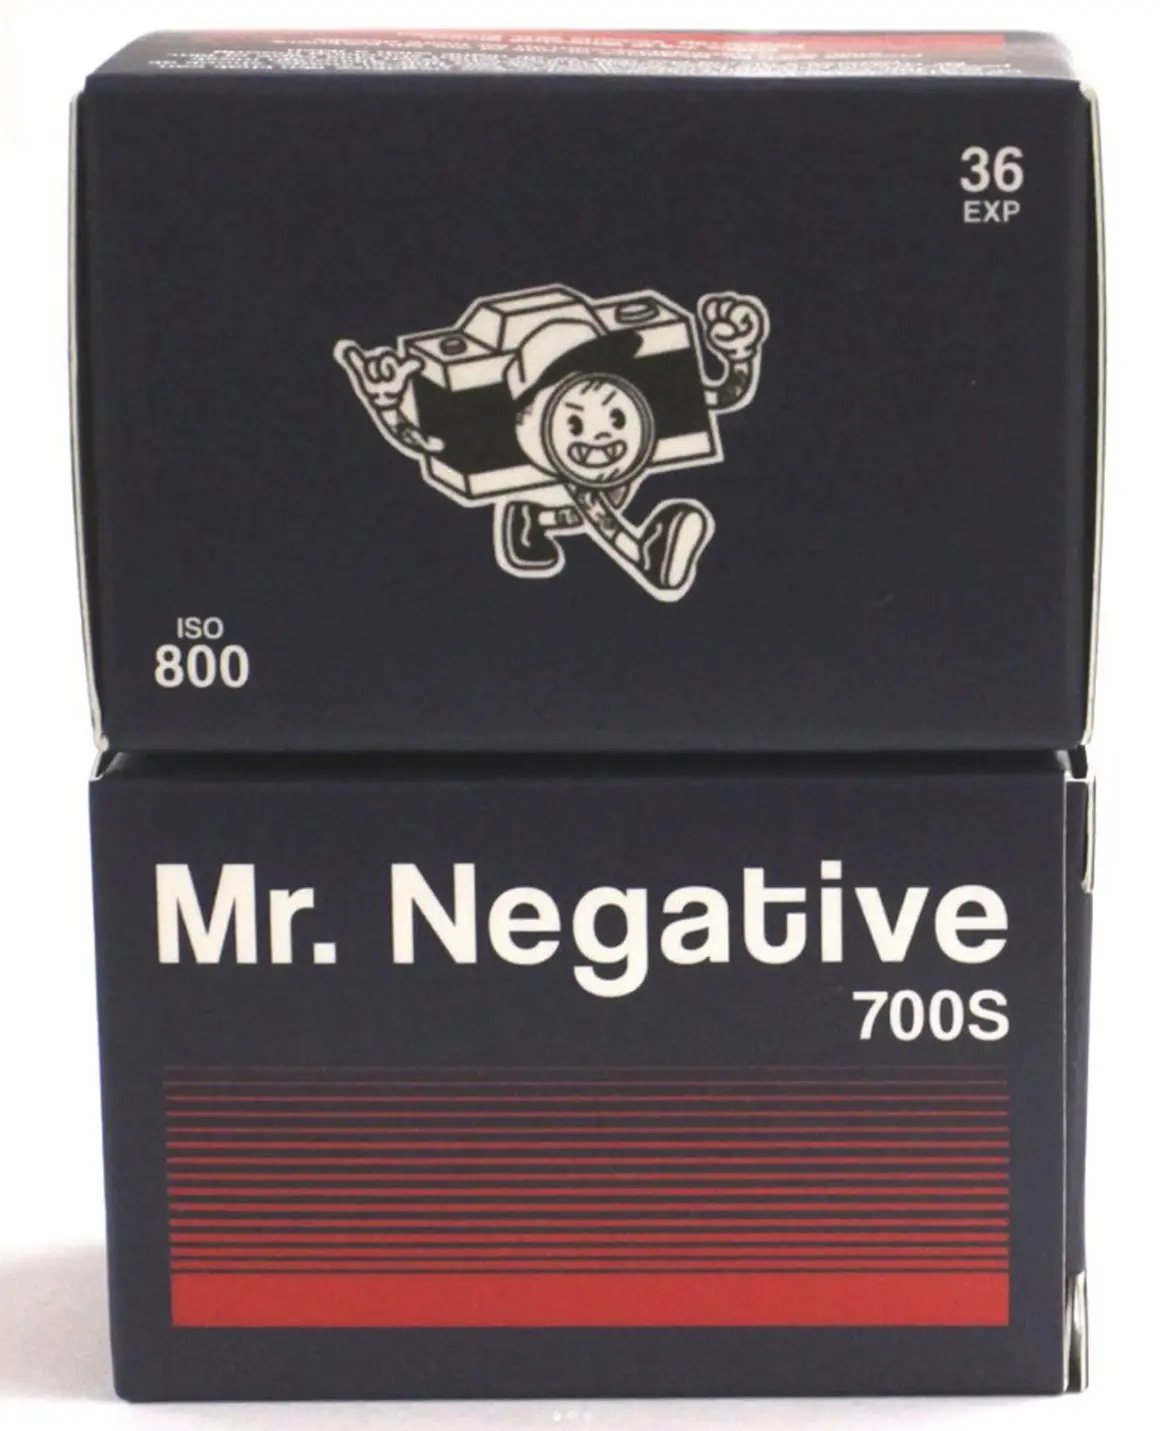 mr negative film product image 1160x1431 jpg